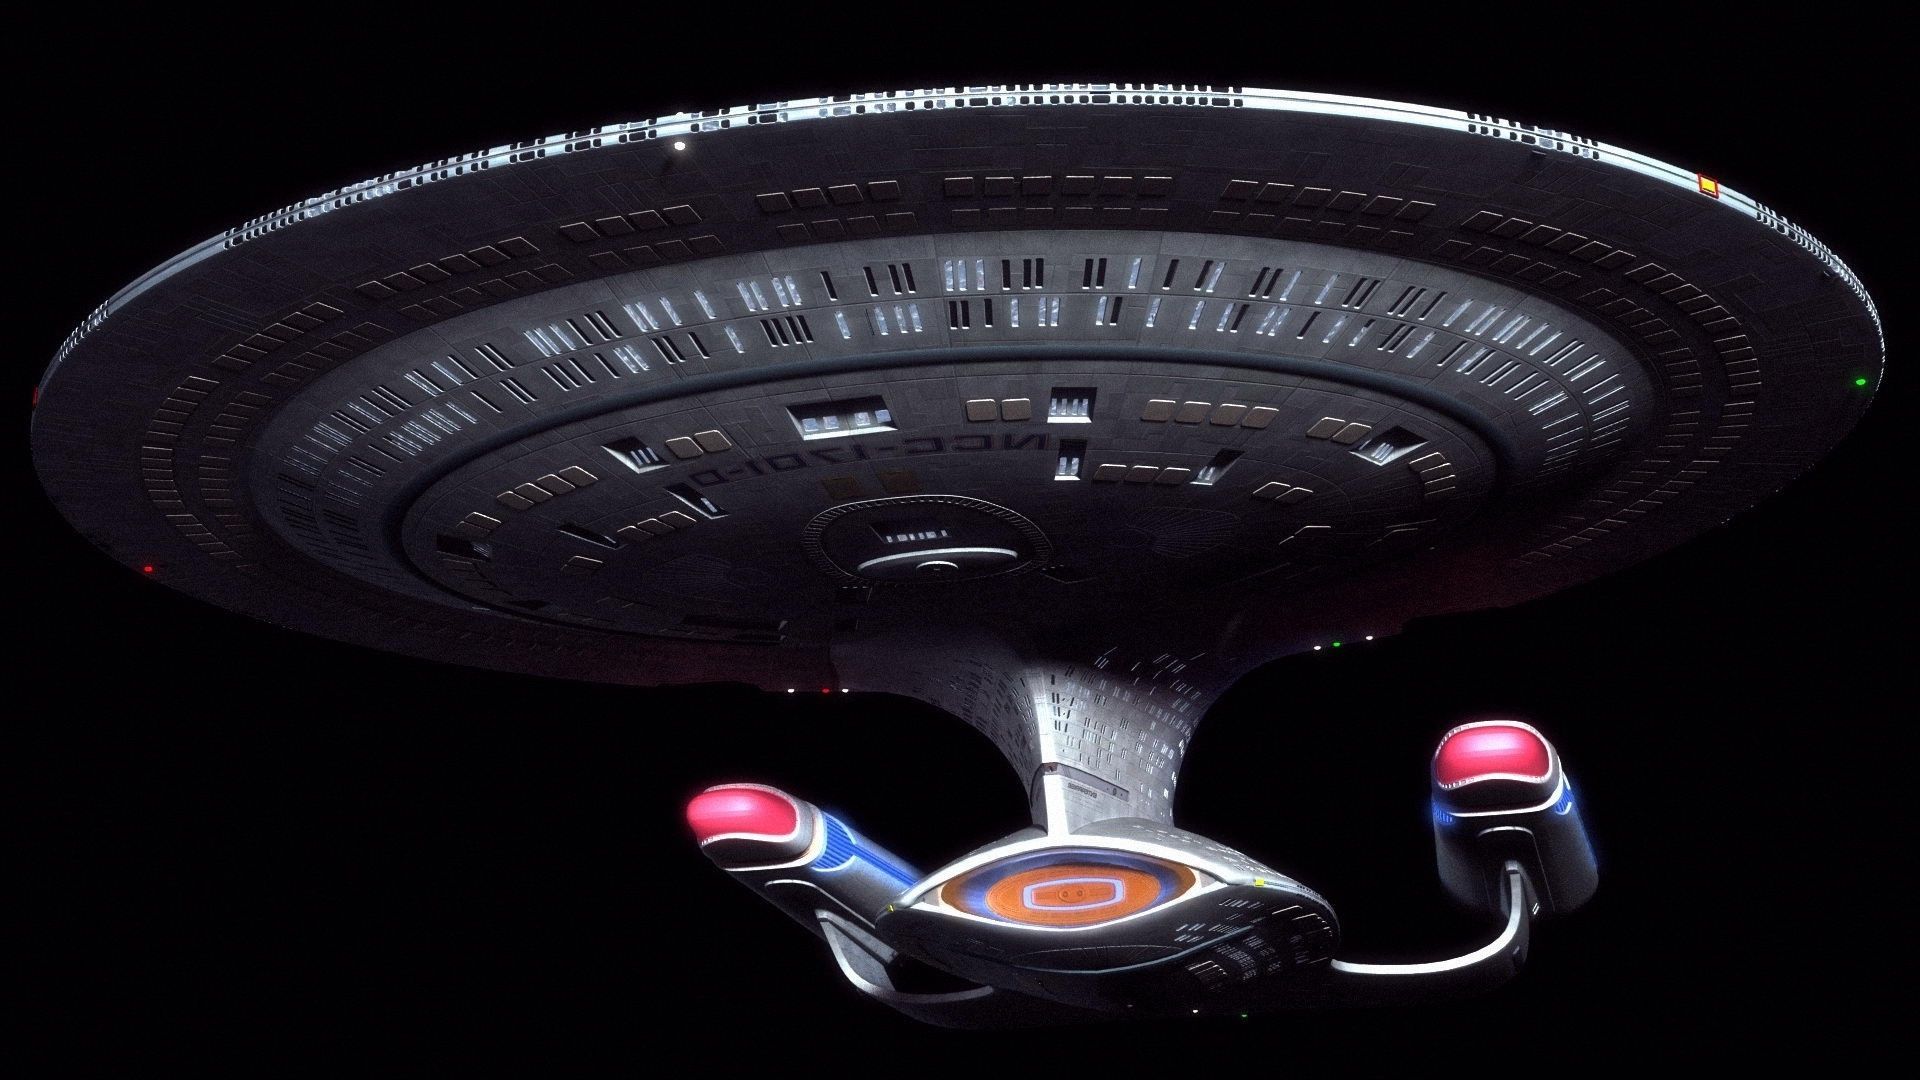 Enterprise - Star Trek Next Generation wallpaper - Free Wide HD ...